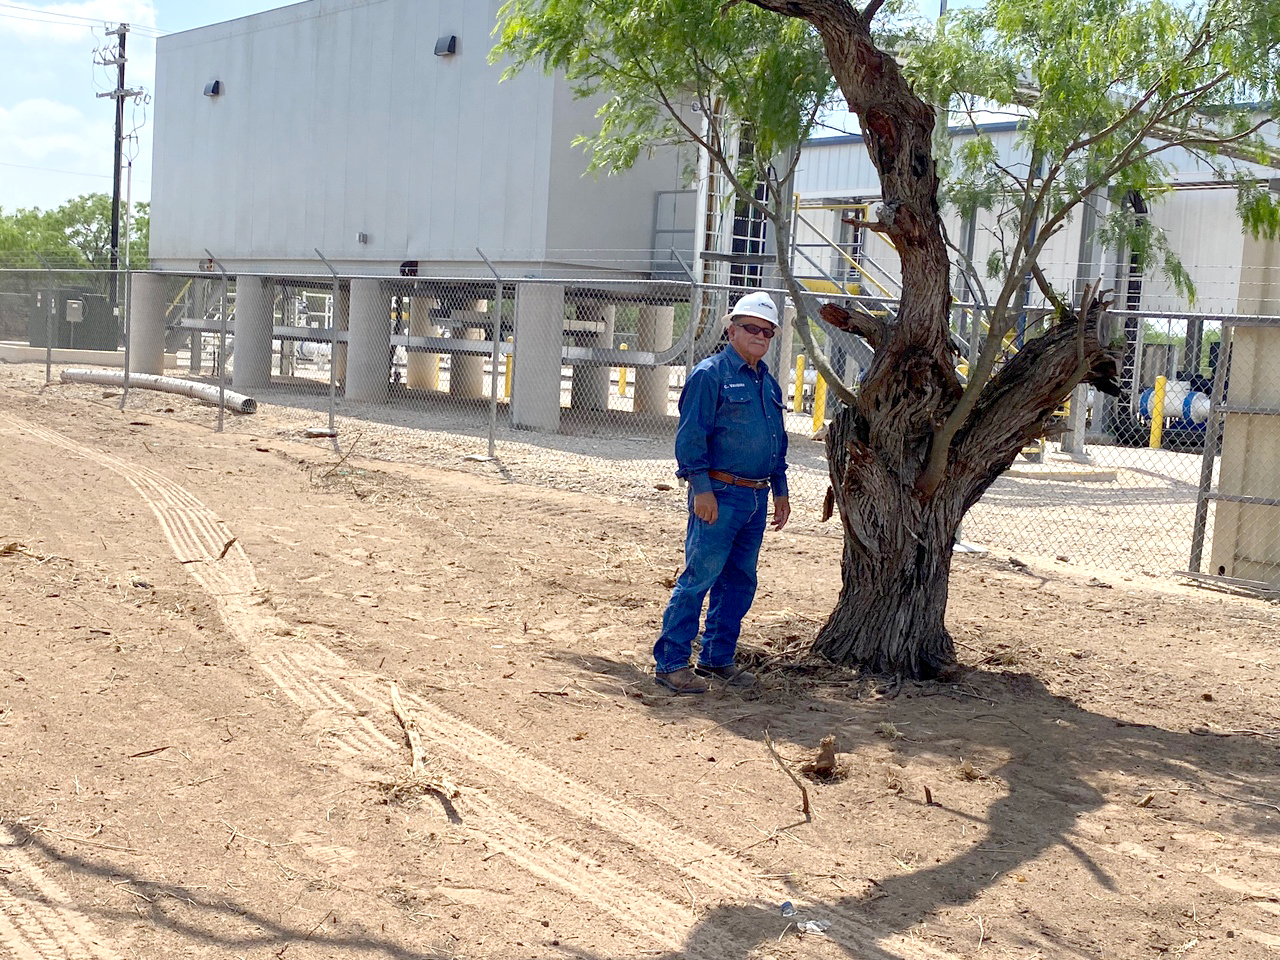 Heritage mesquite tree saved for landowner by Candy Vasquez, Senior Maintenance Manager